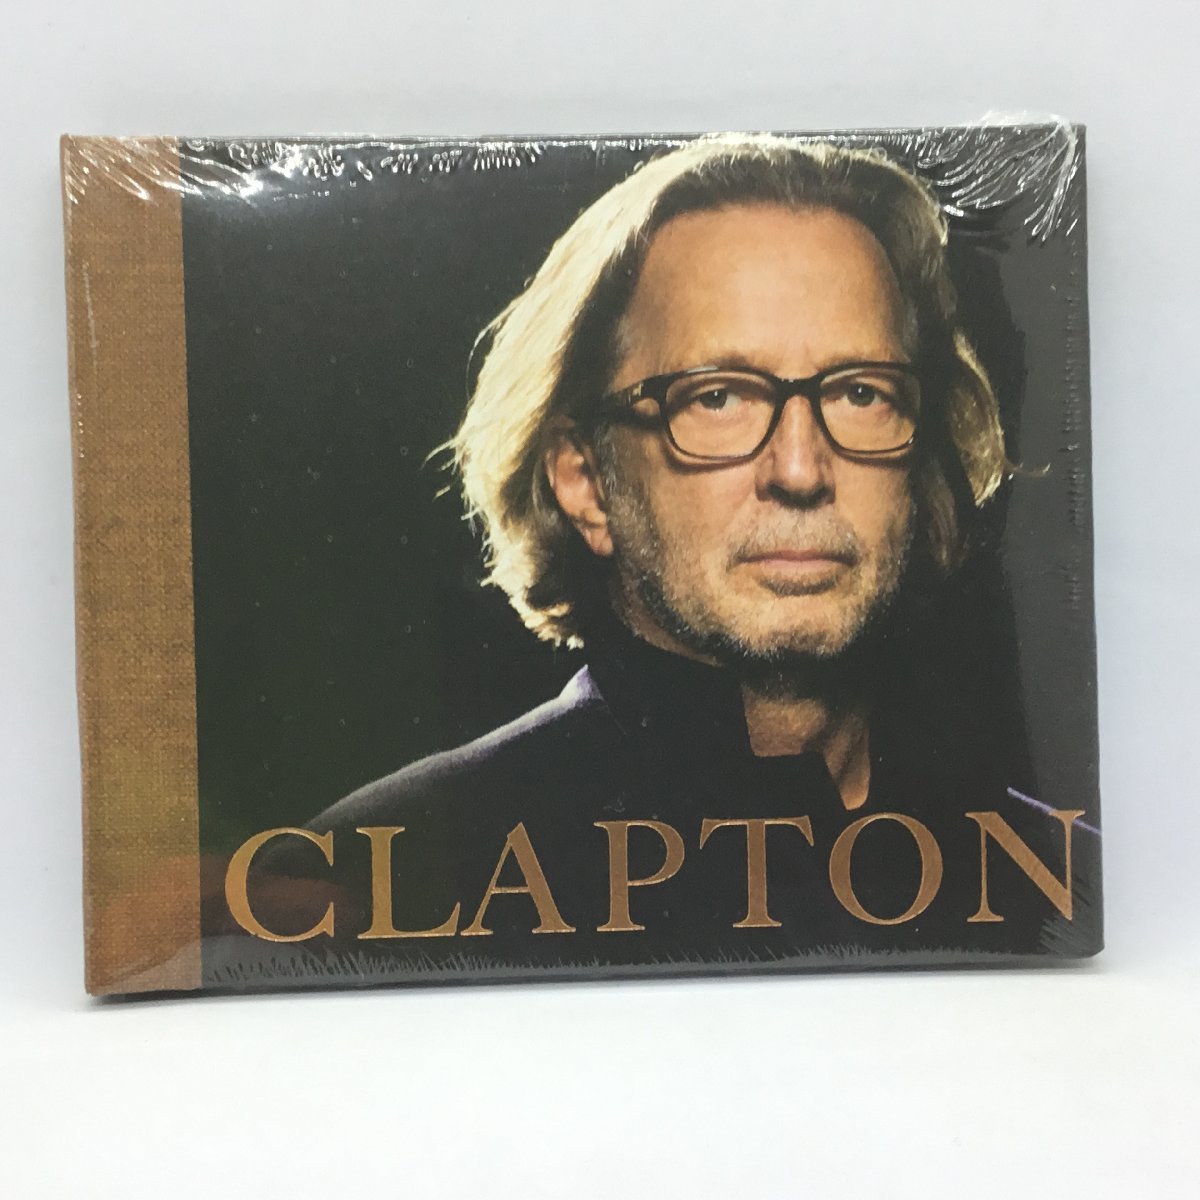 Yahoo!オークション -「gold」(Eric Clapton) (E)の落札相場・落札価格